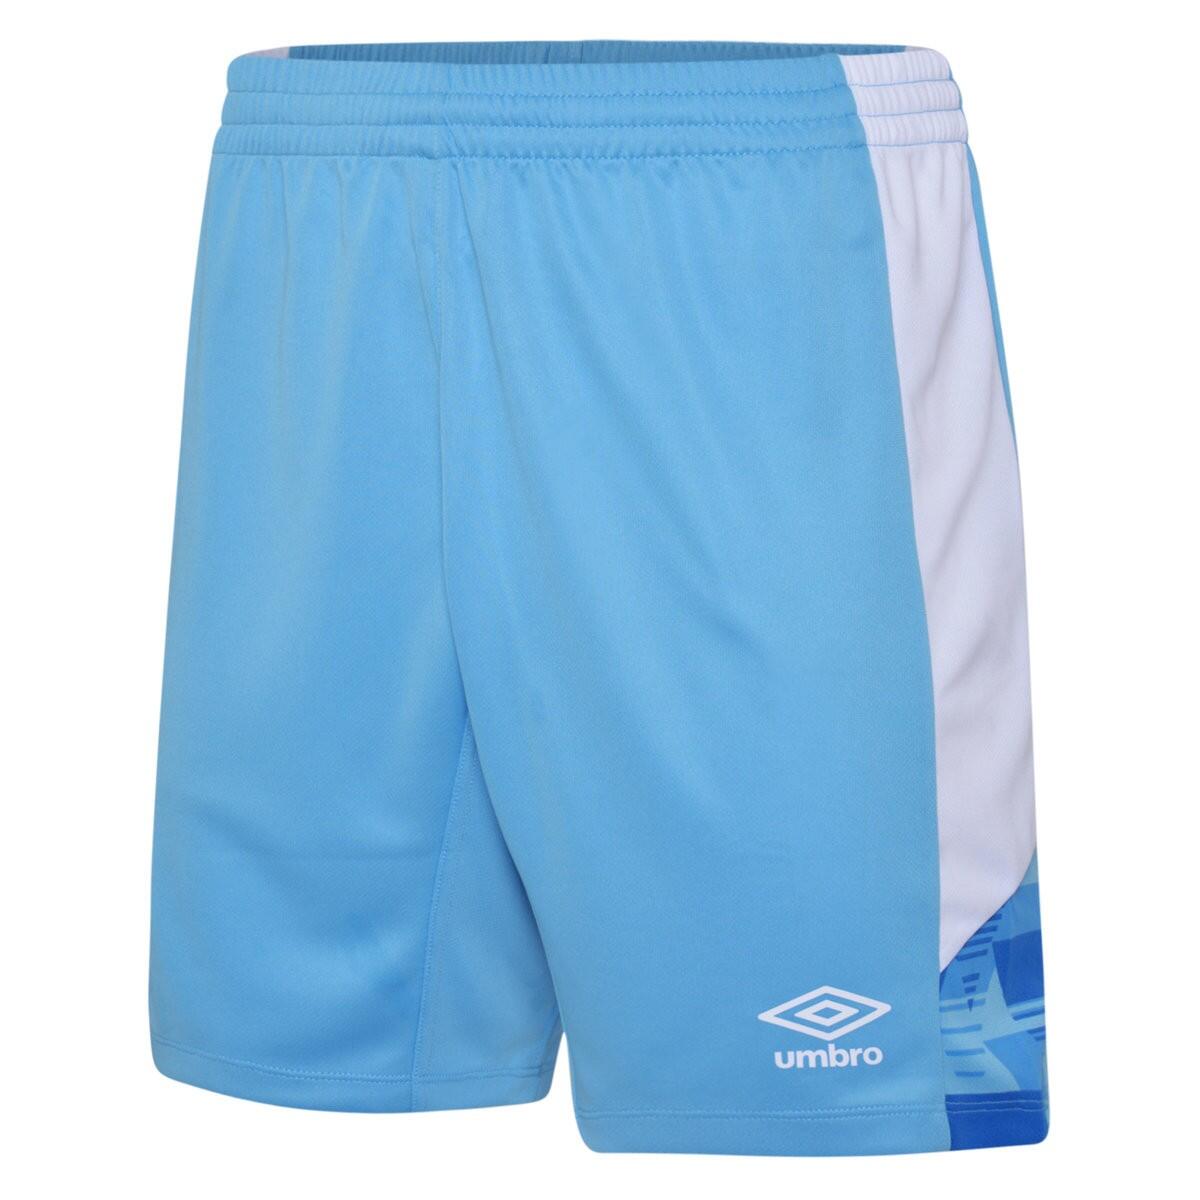 UMBRO Mens Vier Shorts (Sky Blue/White)